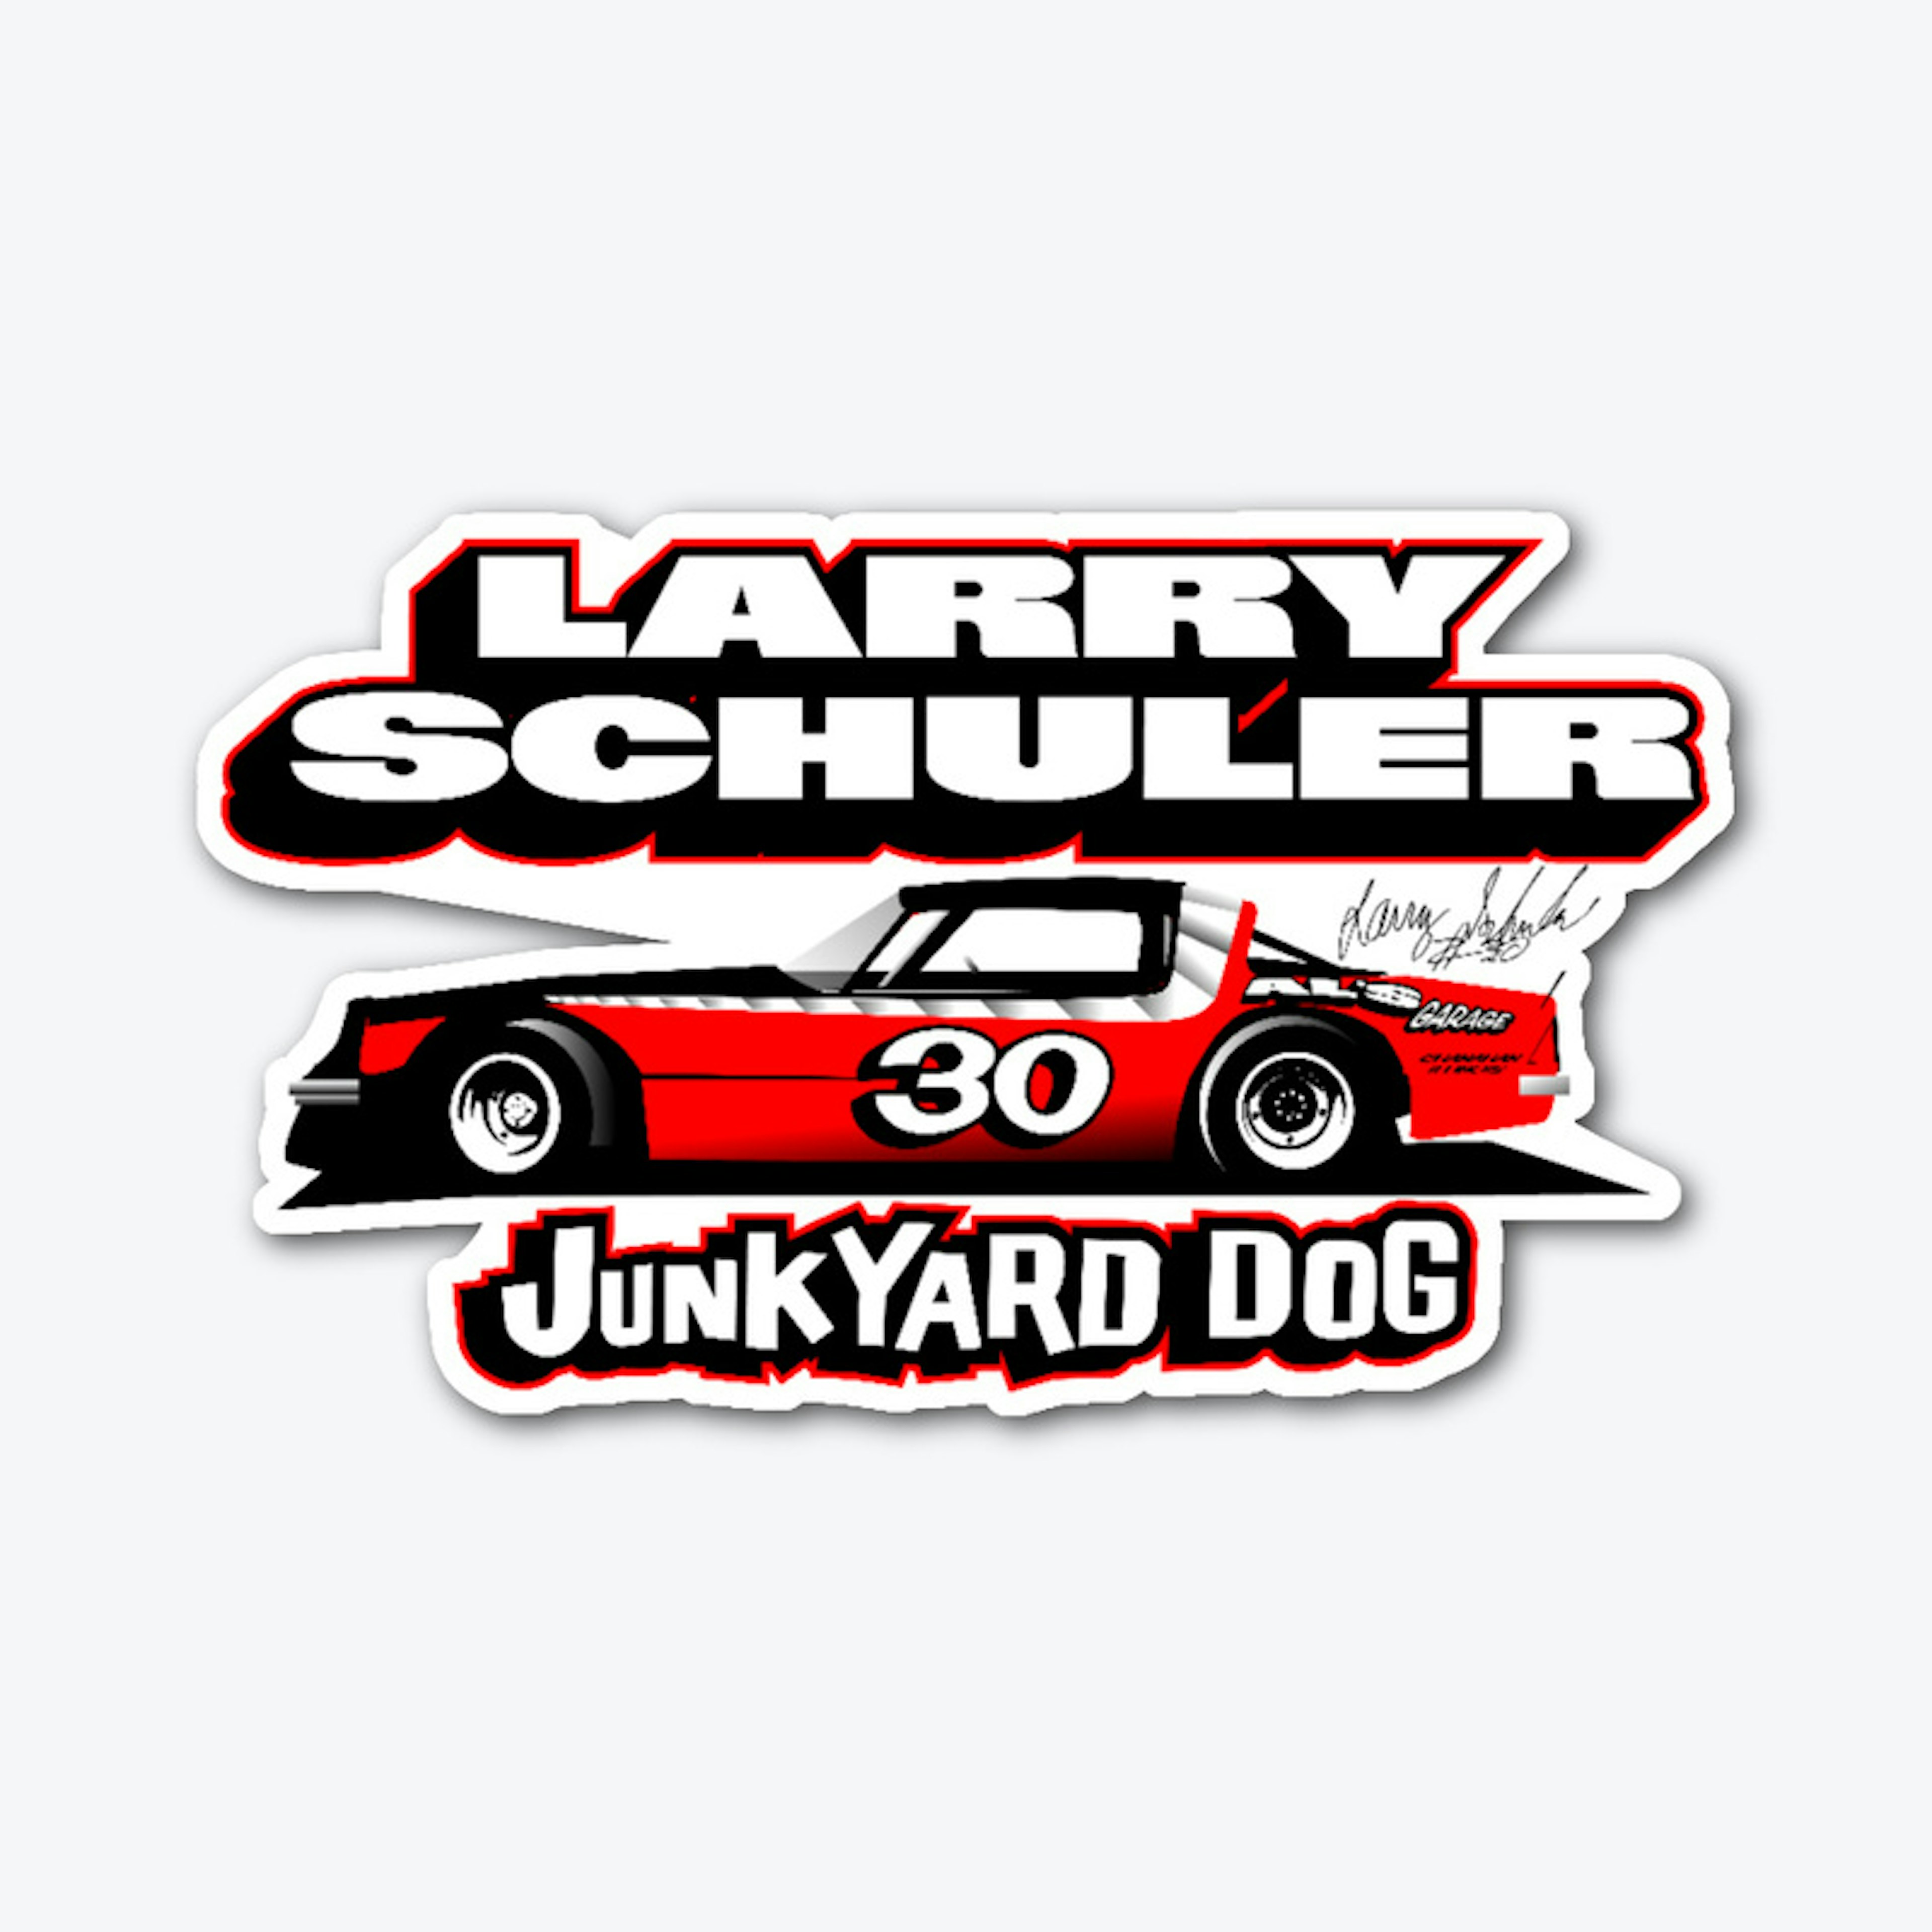 Larry Schuler - Midwest Racer Design